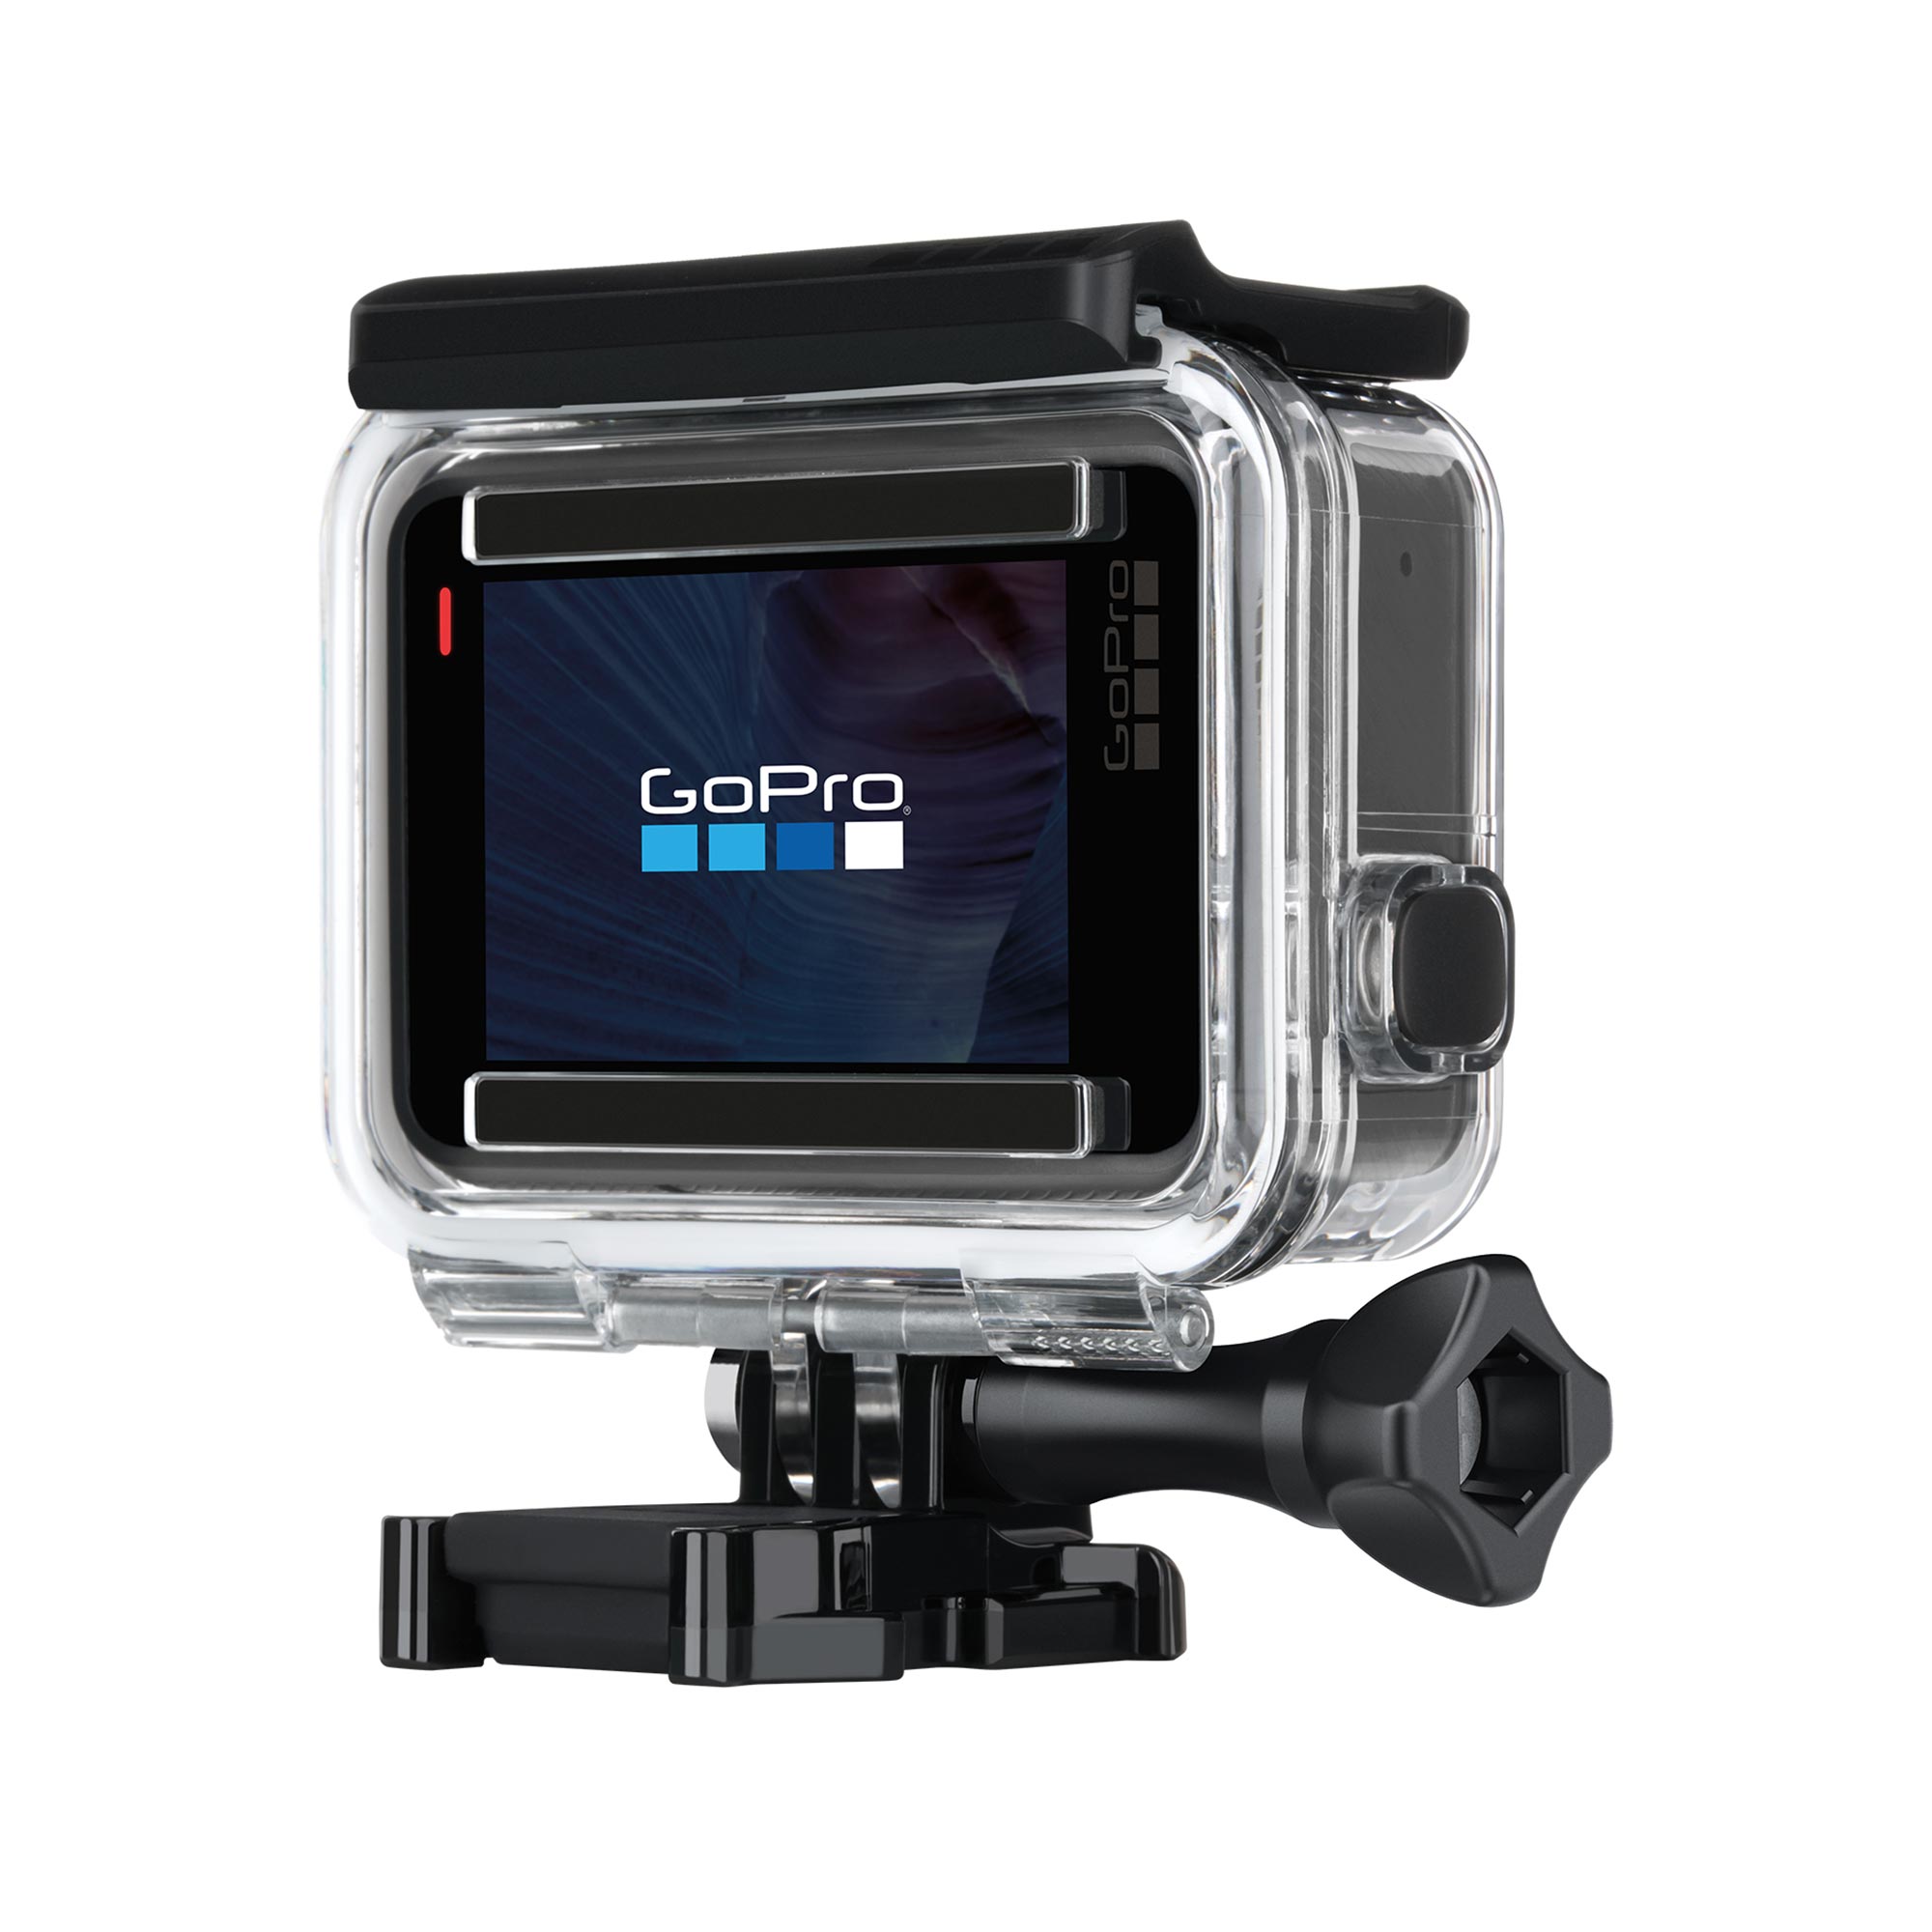 Купить камеру gopro hero. Экшн-камера GOPRO hero5. Камера GOPRO Hero 5. Экшн-камера GOPRO hero5 (CHDHX-501). GOPRO Hero 7.